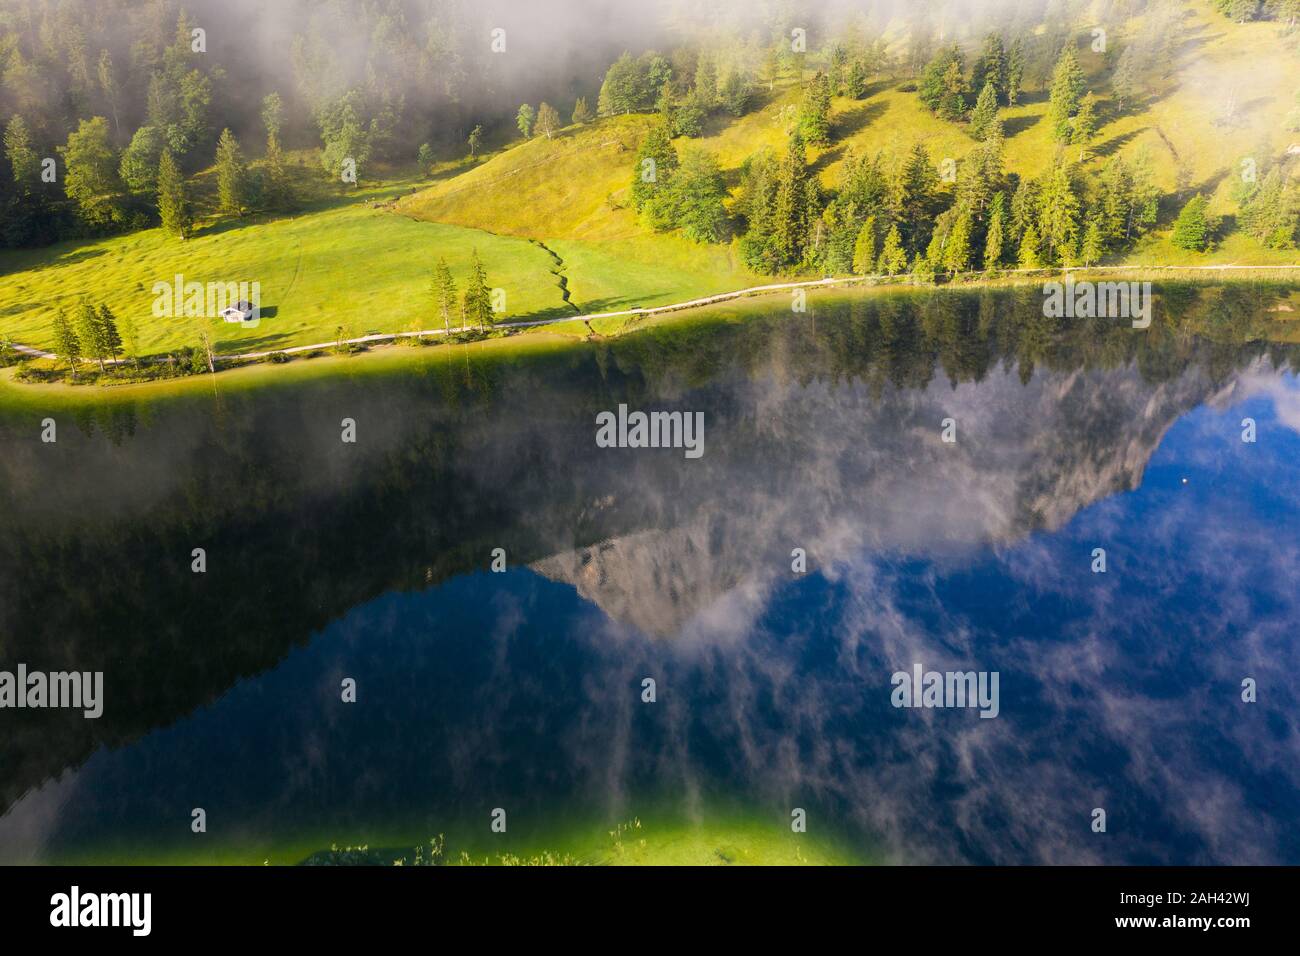 In Germania, in Baviera, Mittenwald, veduta aerea della montagna Wettersteinspitzen riflettente nel lago Ferchensee Foto Stock